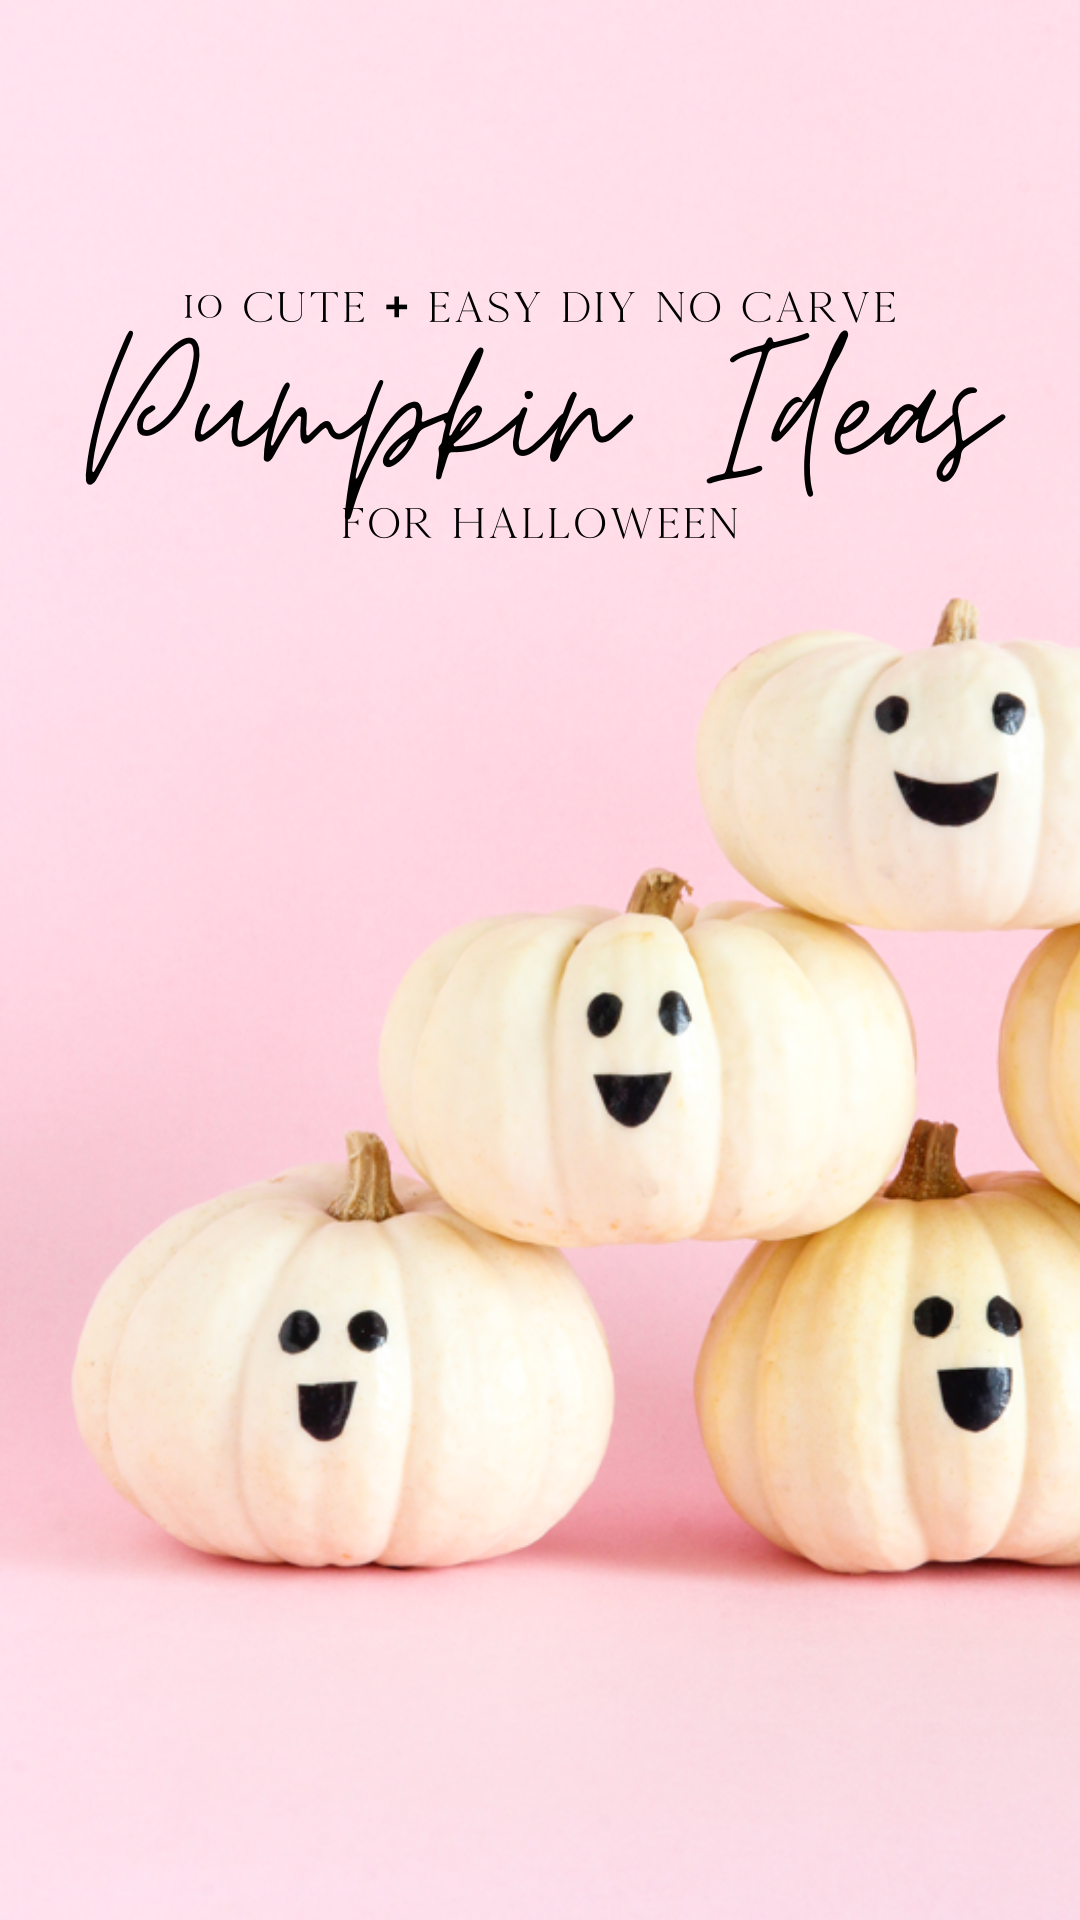 10 Cute + Easy No Carve Pumpkin Ideas